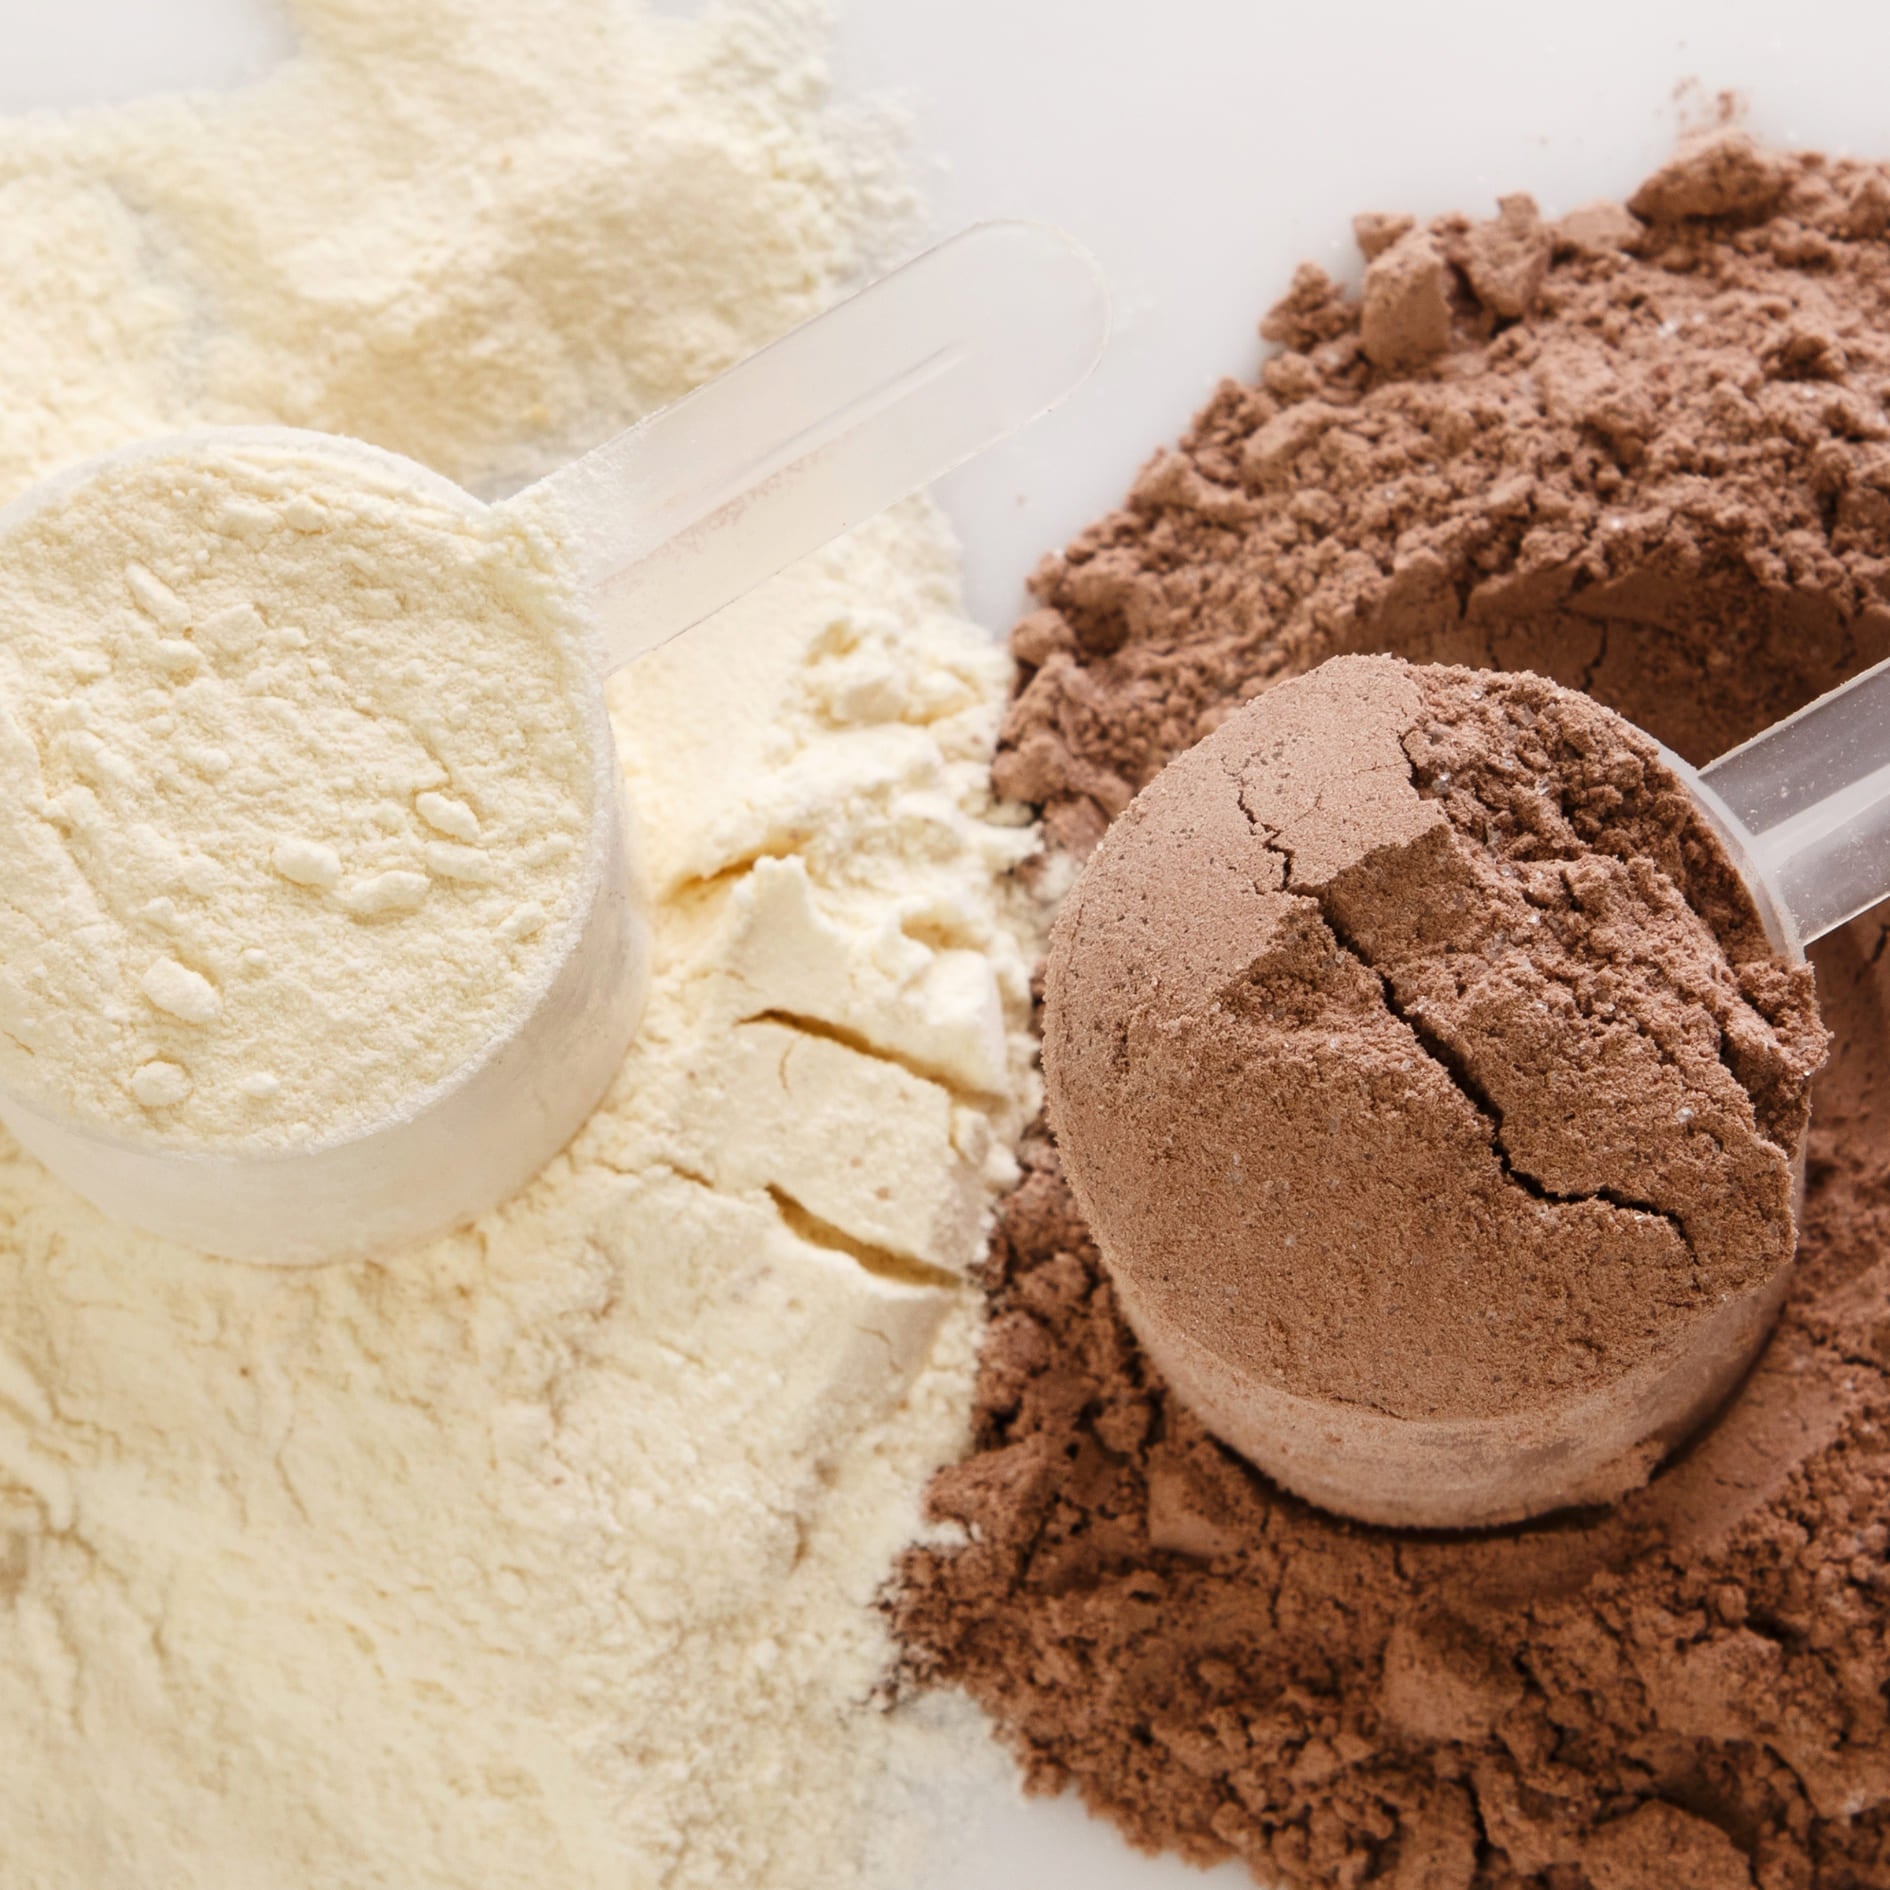 Chocolate and Vanilla Protein Powder